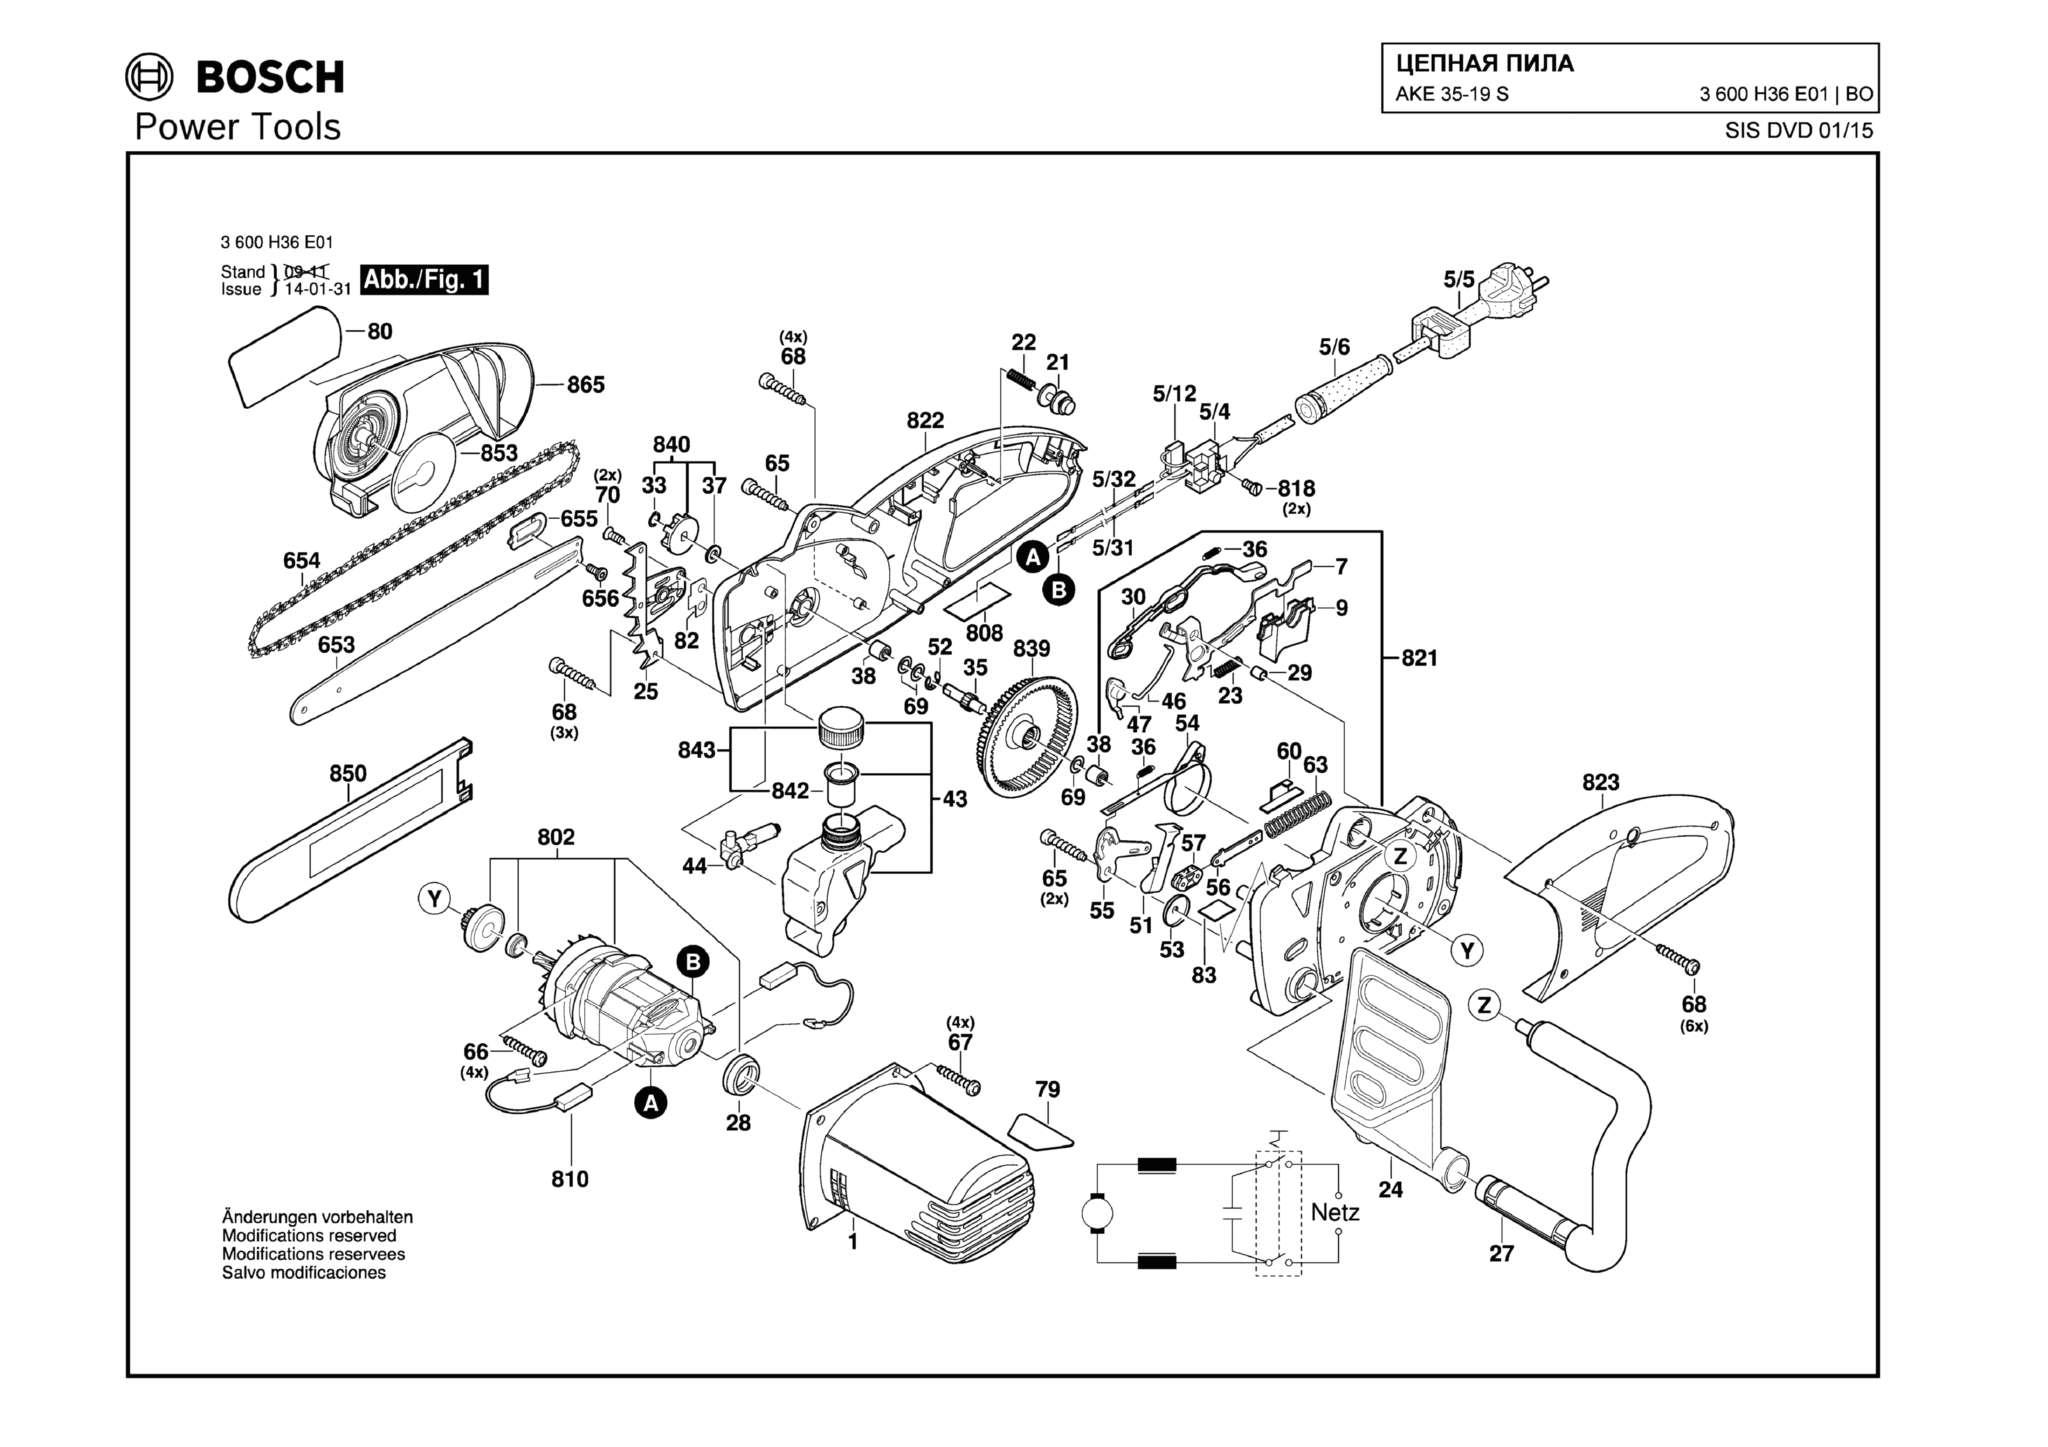 Запчасти, схема и деталировка Bosch AKE 35-19 S (ТИП 3600H36E01)